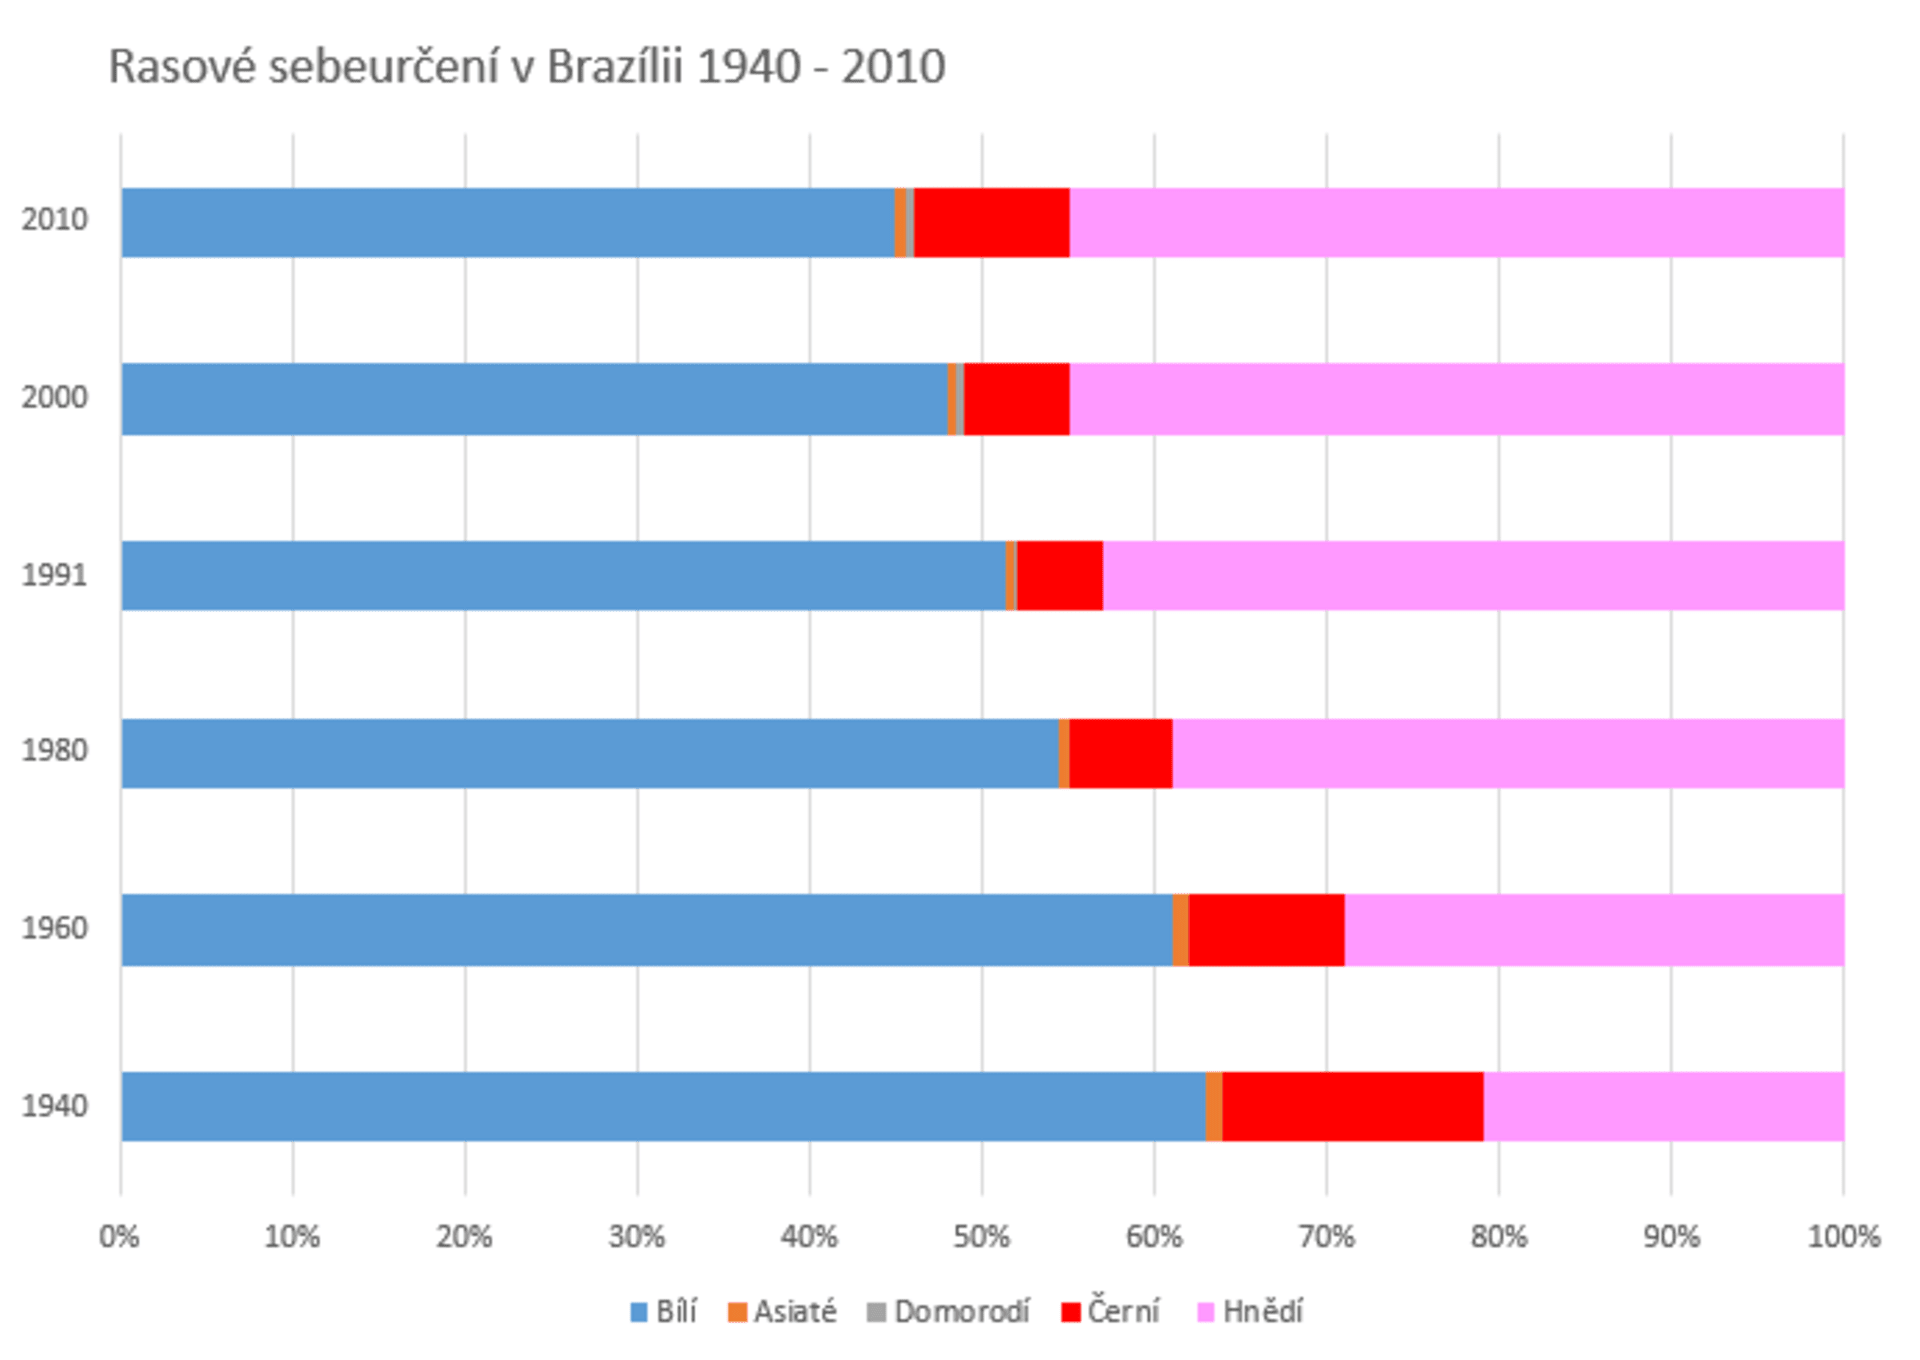 Zdroj: Brazilský institut pro geografii a statistiku. 